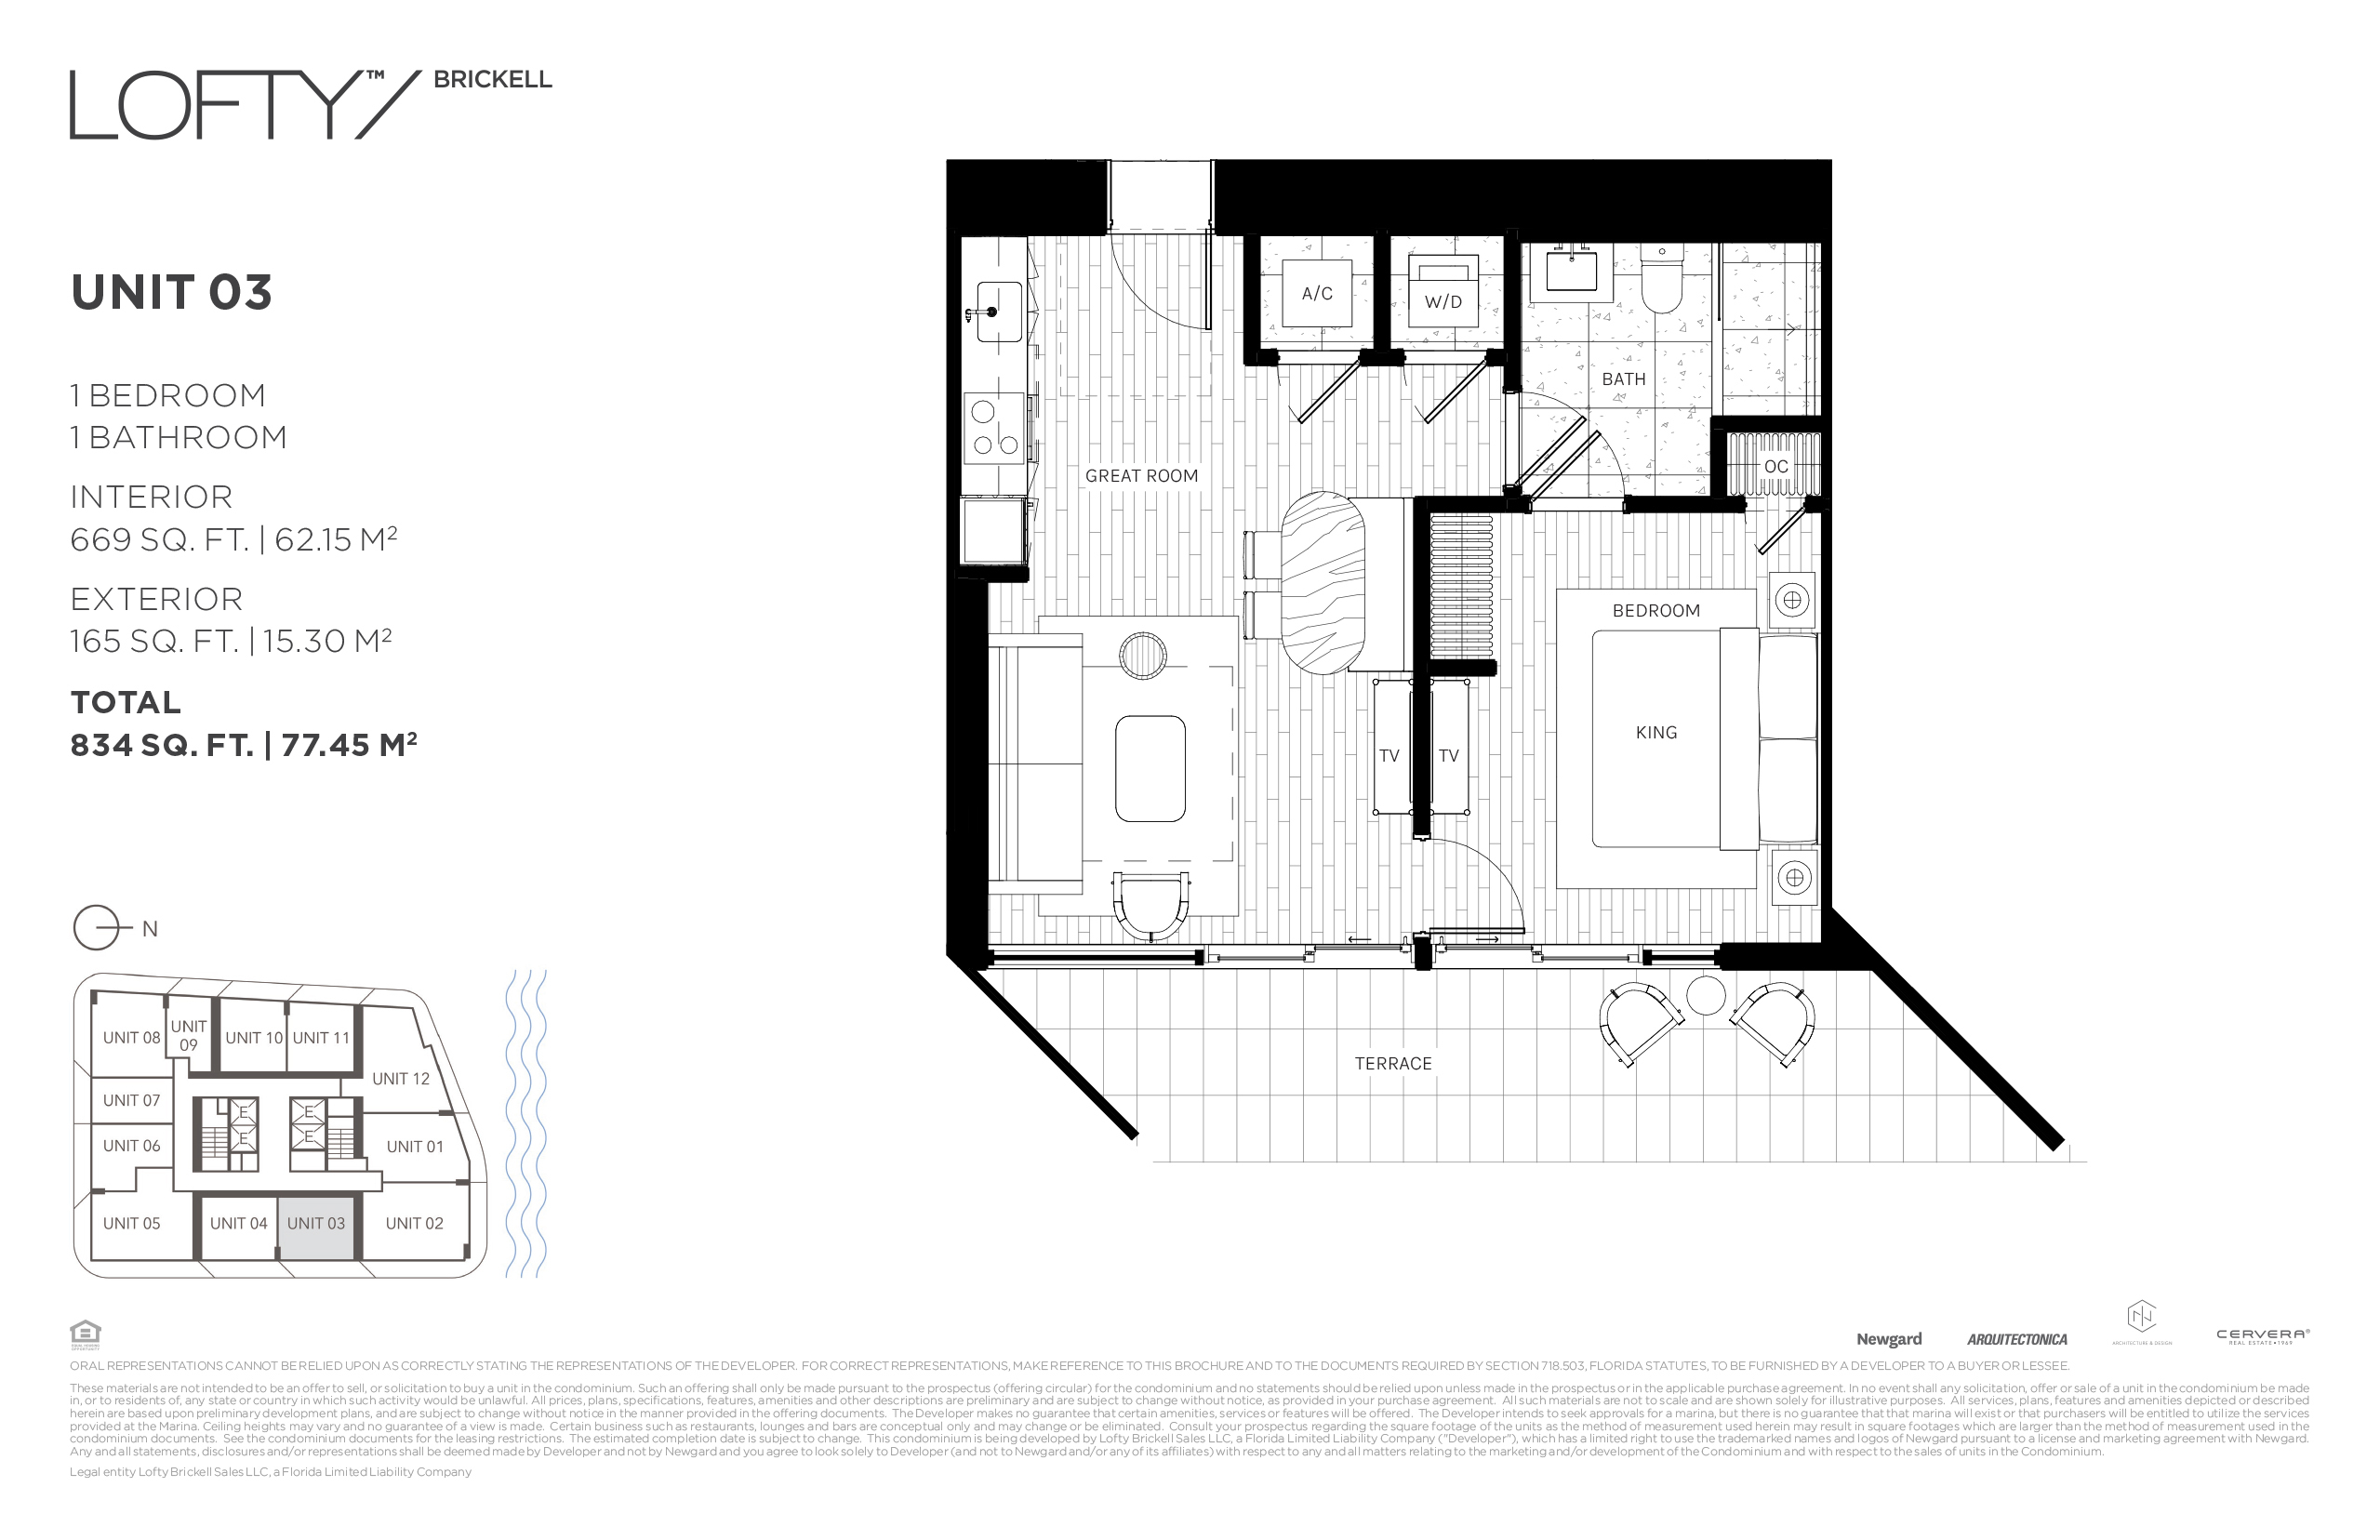 Floor Plan for Lofty Brickell Floorplans, Unit 03